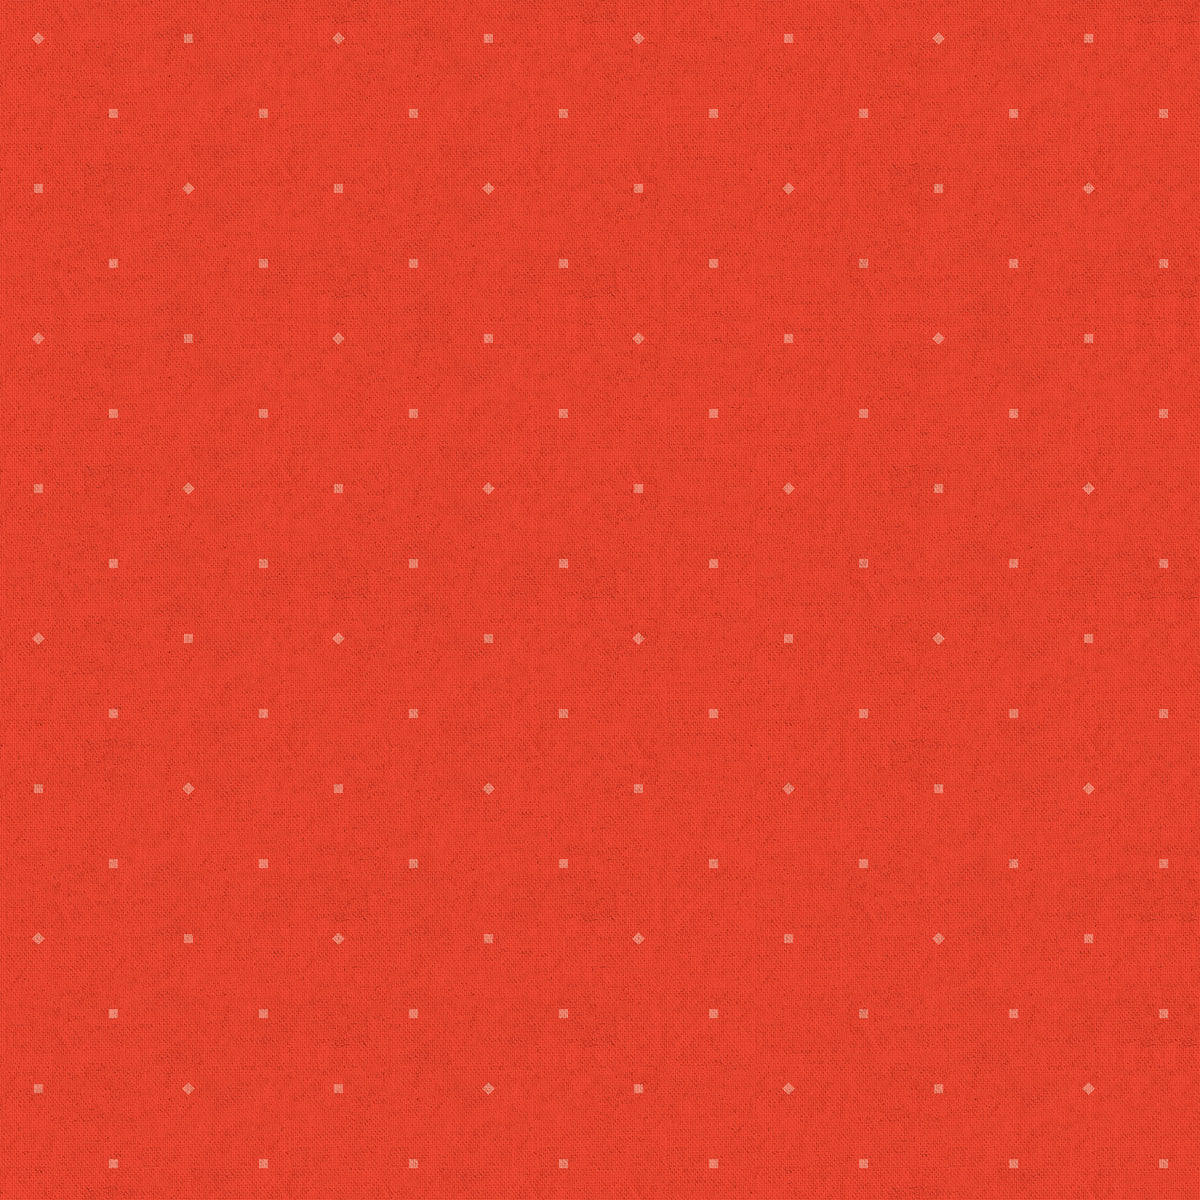 Cotton + Steel Basics Canvas Fabric - Square Up (Square Dots) in Ladybug Red  - CS103-LA12C